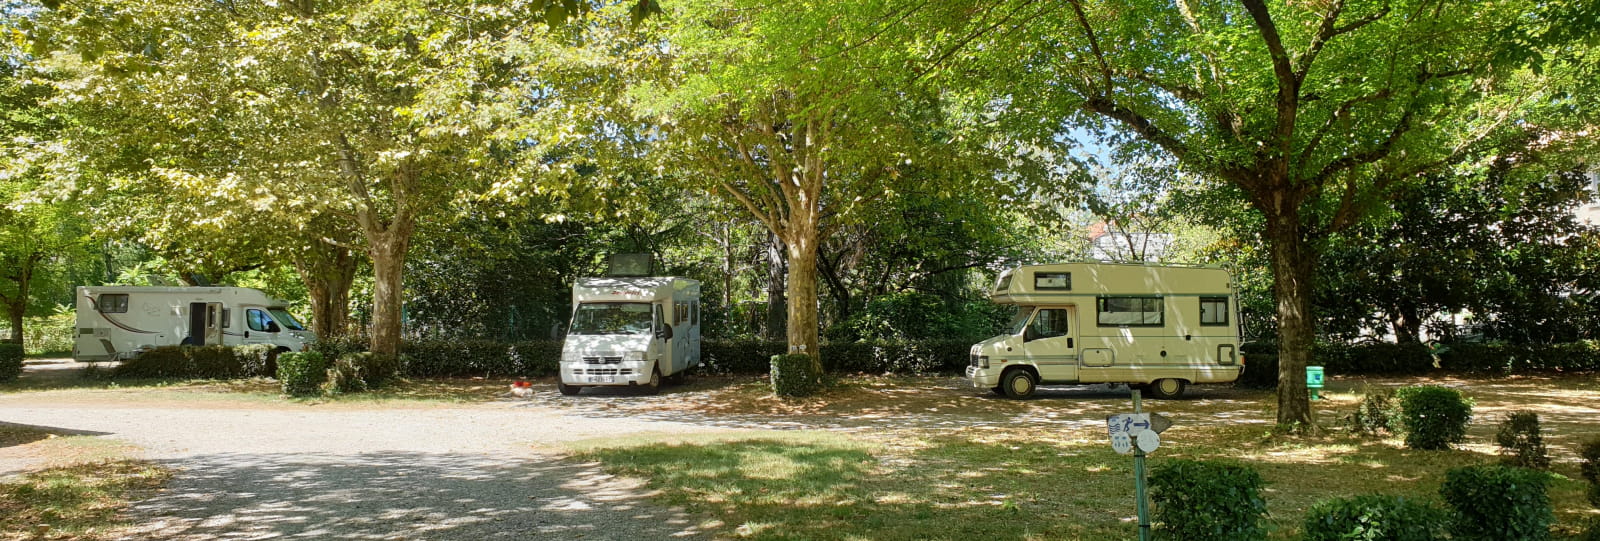 Aire Camping-cars La Roche-de-Glun - l'Hermitage au fil du Rhône